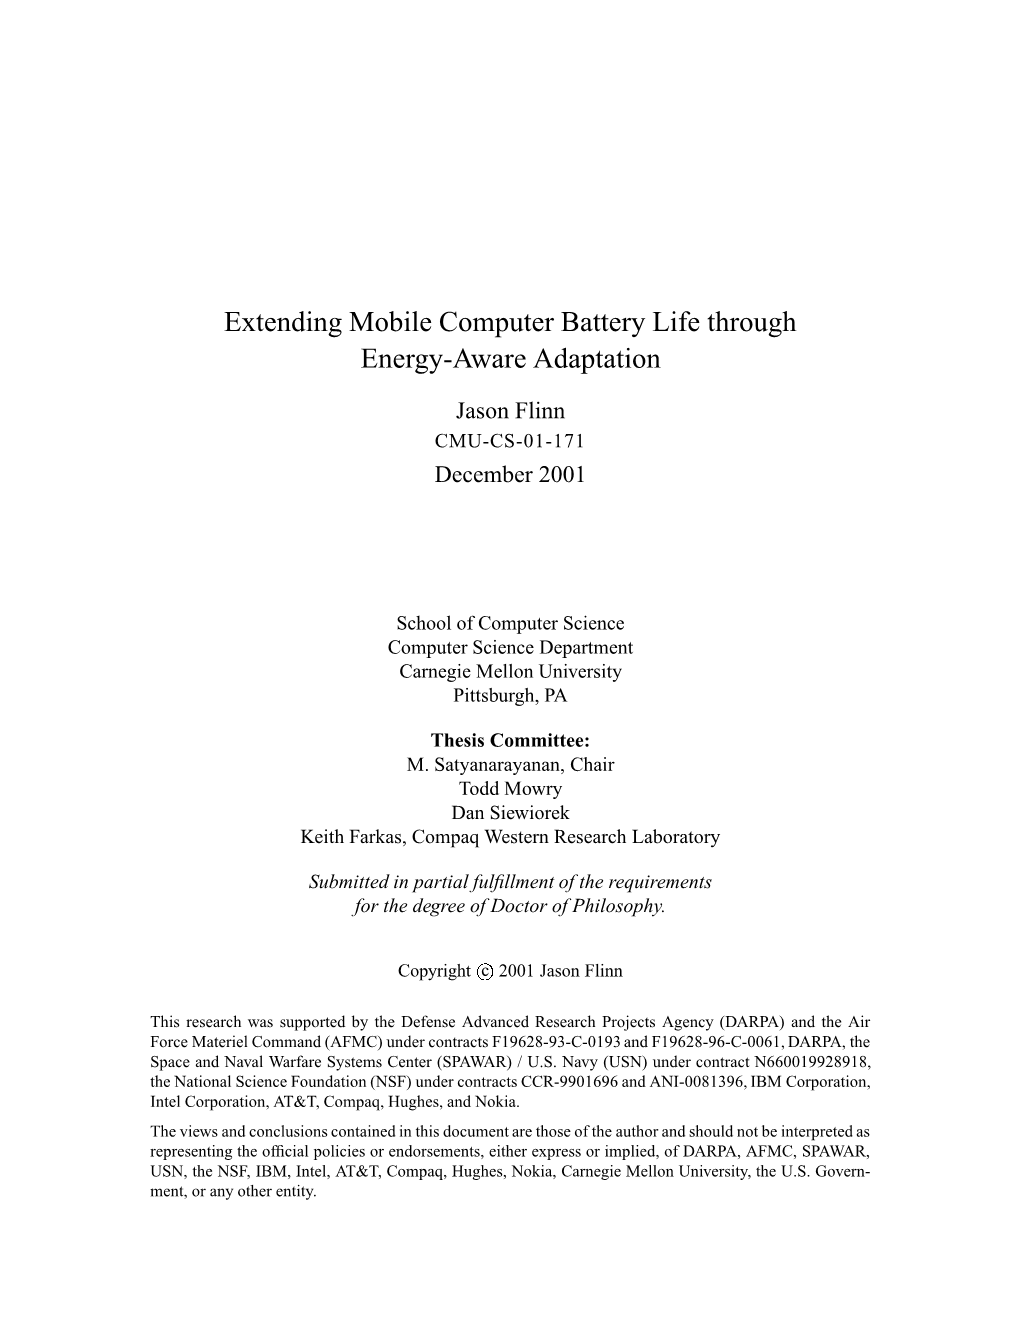 Extending Mobile Computer Battery Life Through Energy-Aware Adaptation